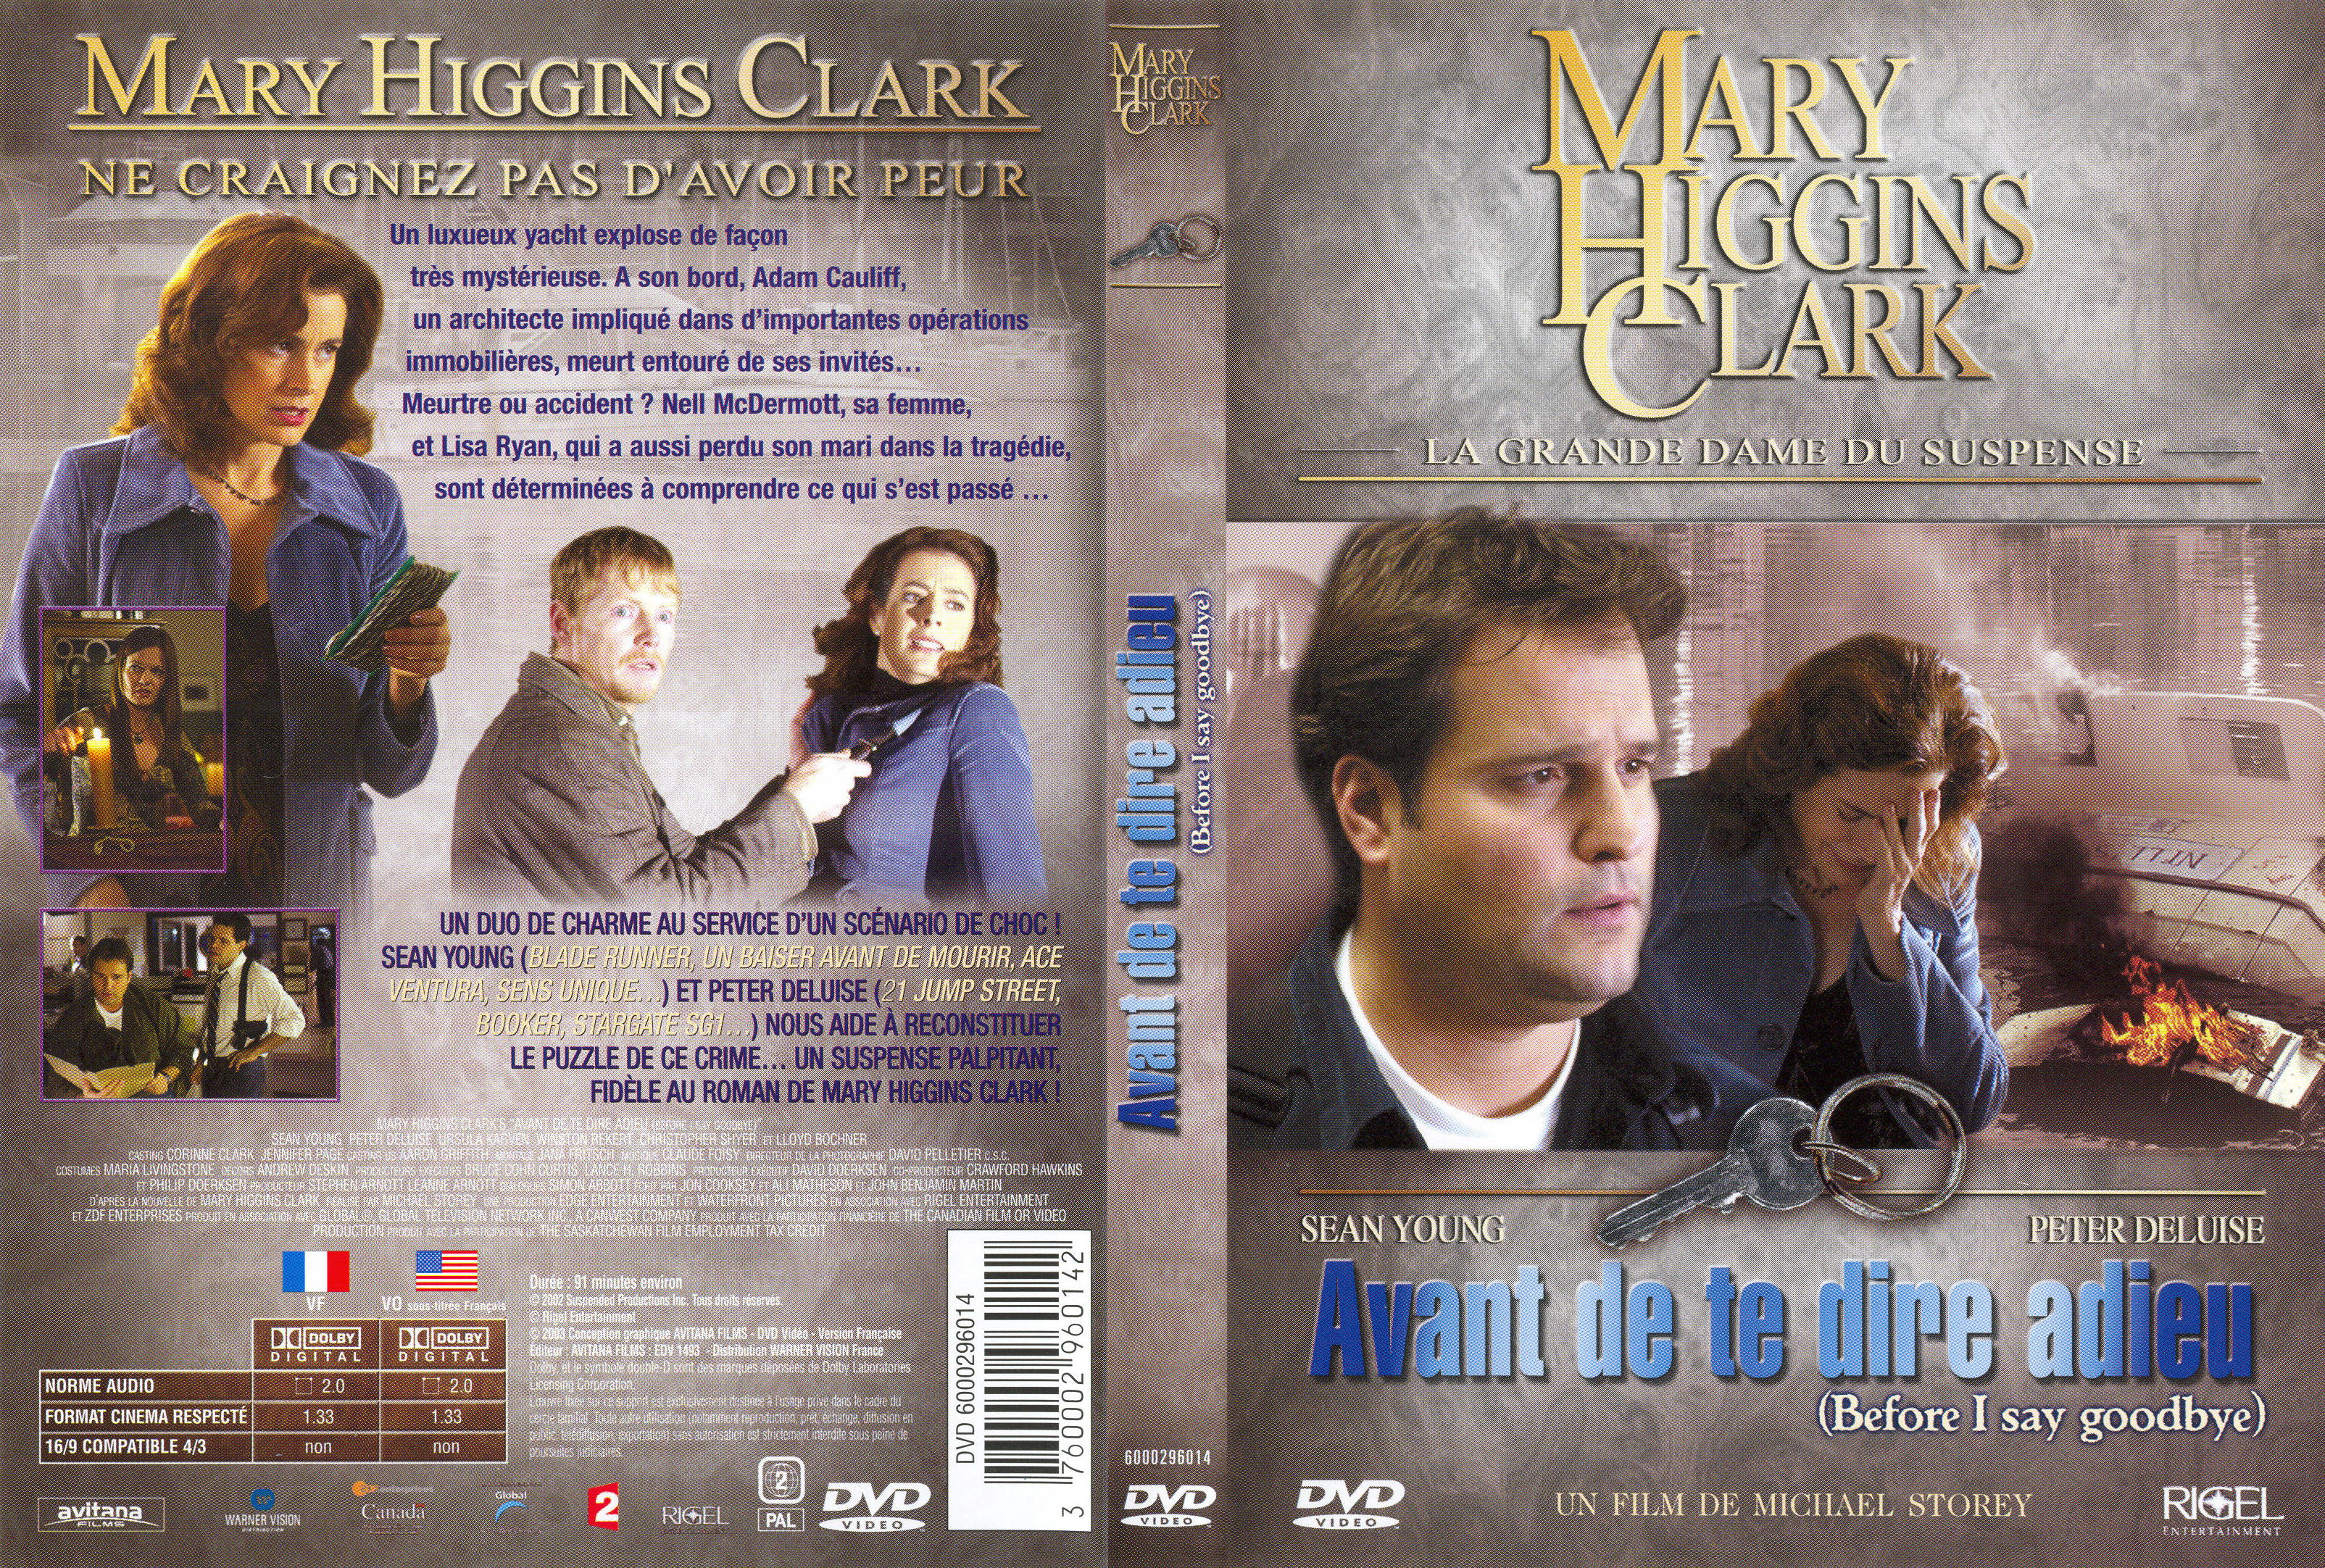 Jaquette DVD de Mary Higgins Clark - Avant de te dire adieu v2 - Cinéma Passion